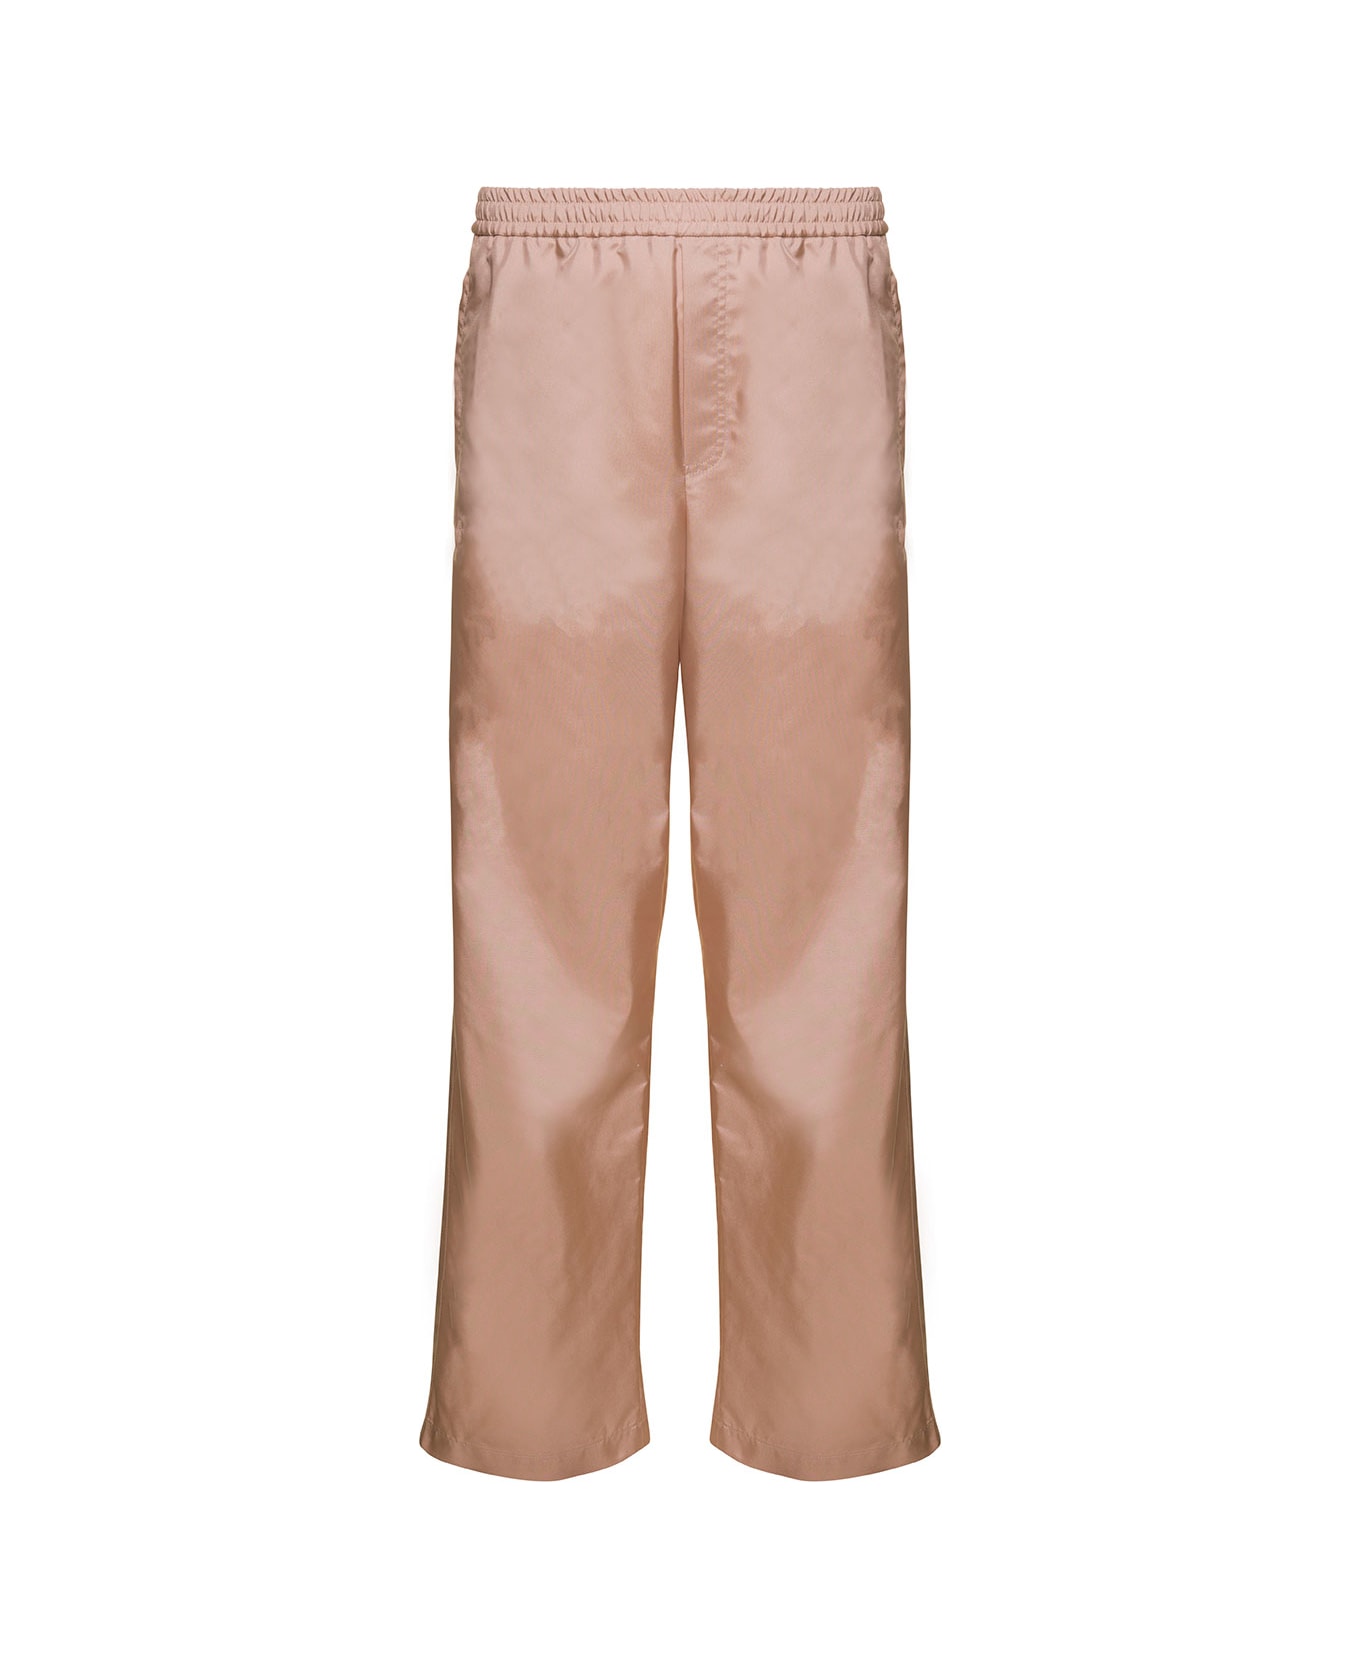 Valentino Pantalone Jogger | Set | Textured Nylon - Sand ボトムス